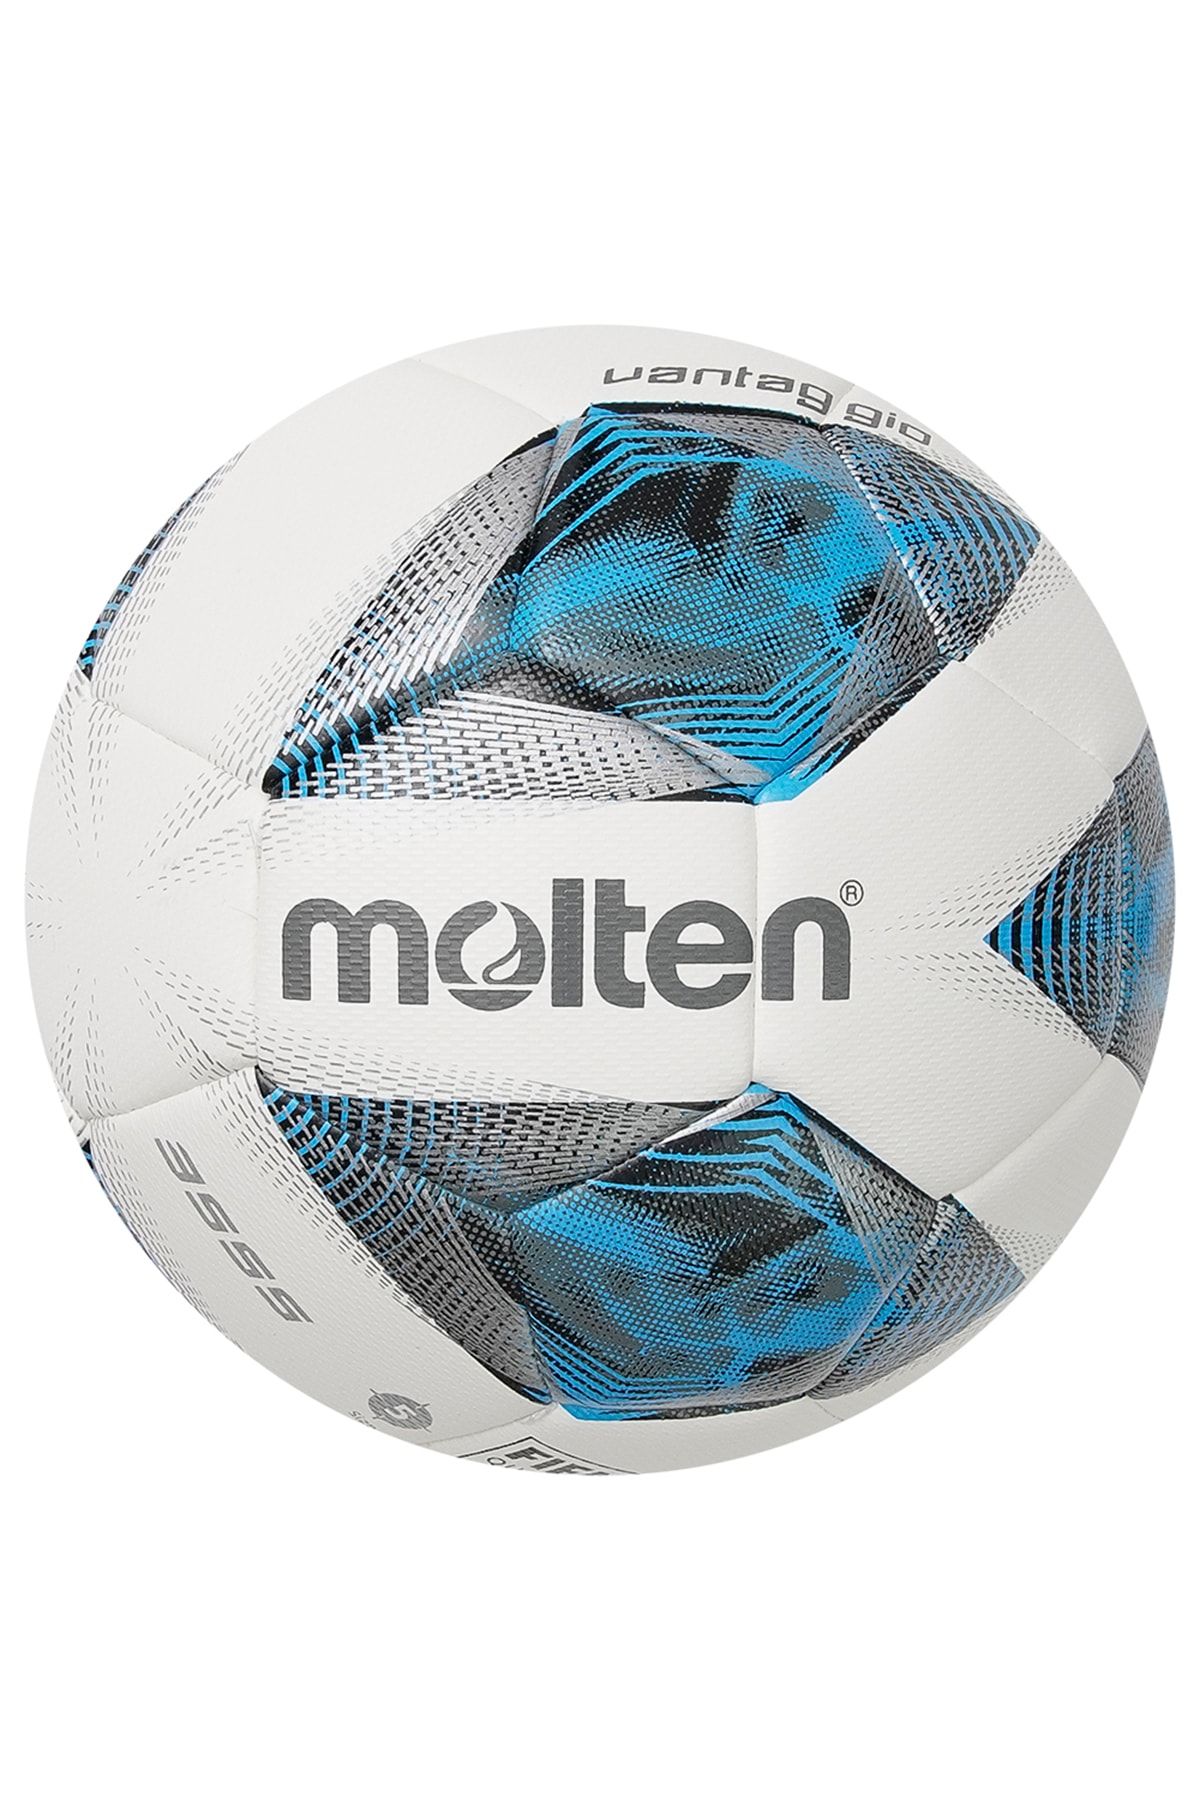 Molten F5a3555-k Fıfa Onaylı 5 Numara Futbol Topu